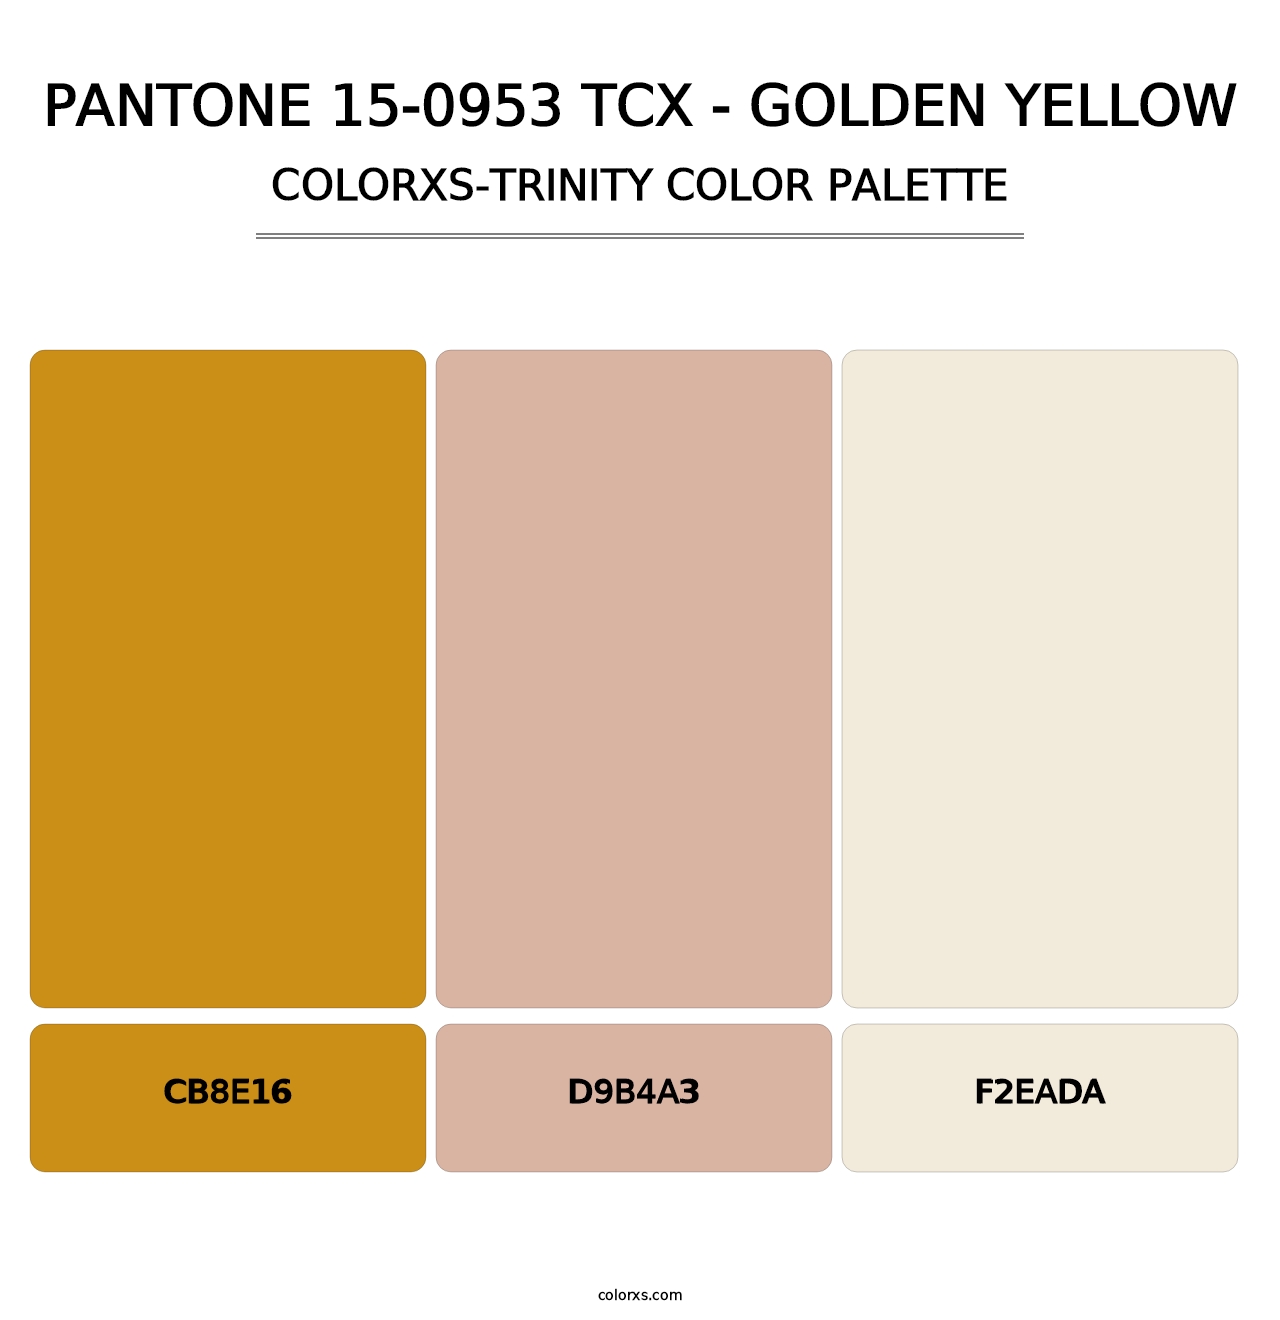 PANTONE 15-0953 TCX - Golden Yellow - Colorxs Trinity Palette